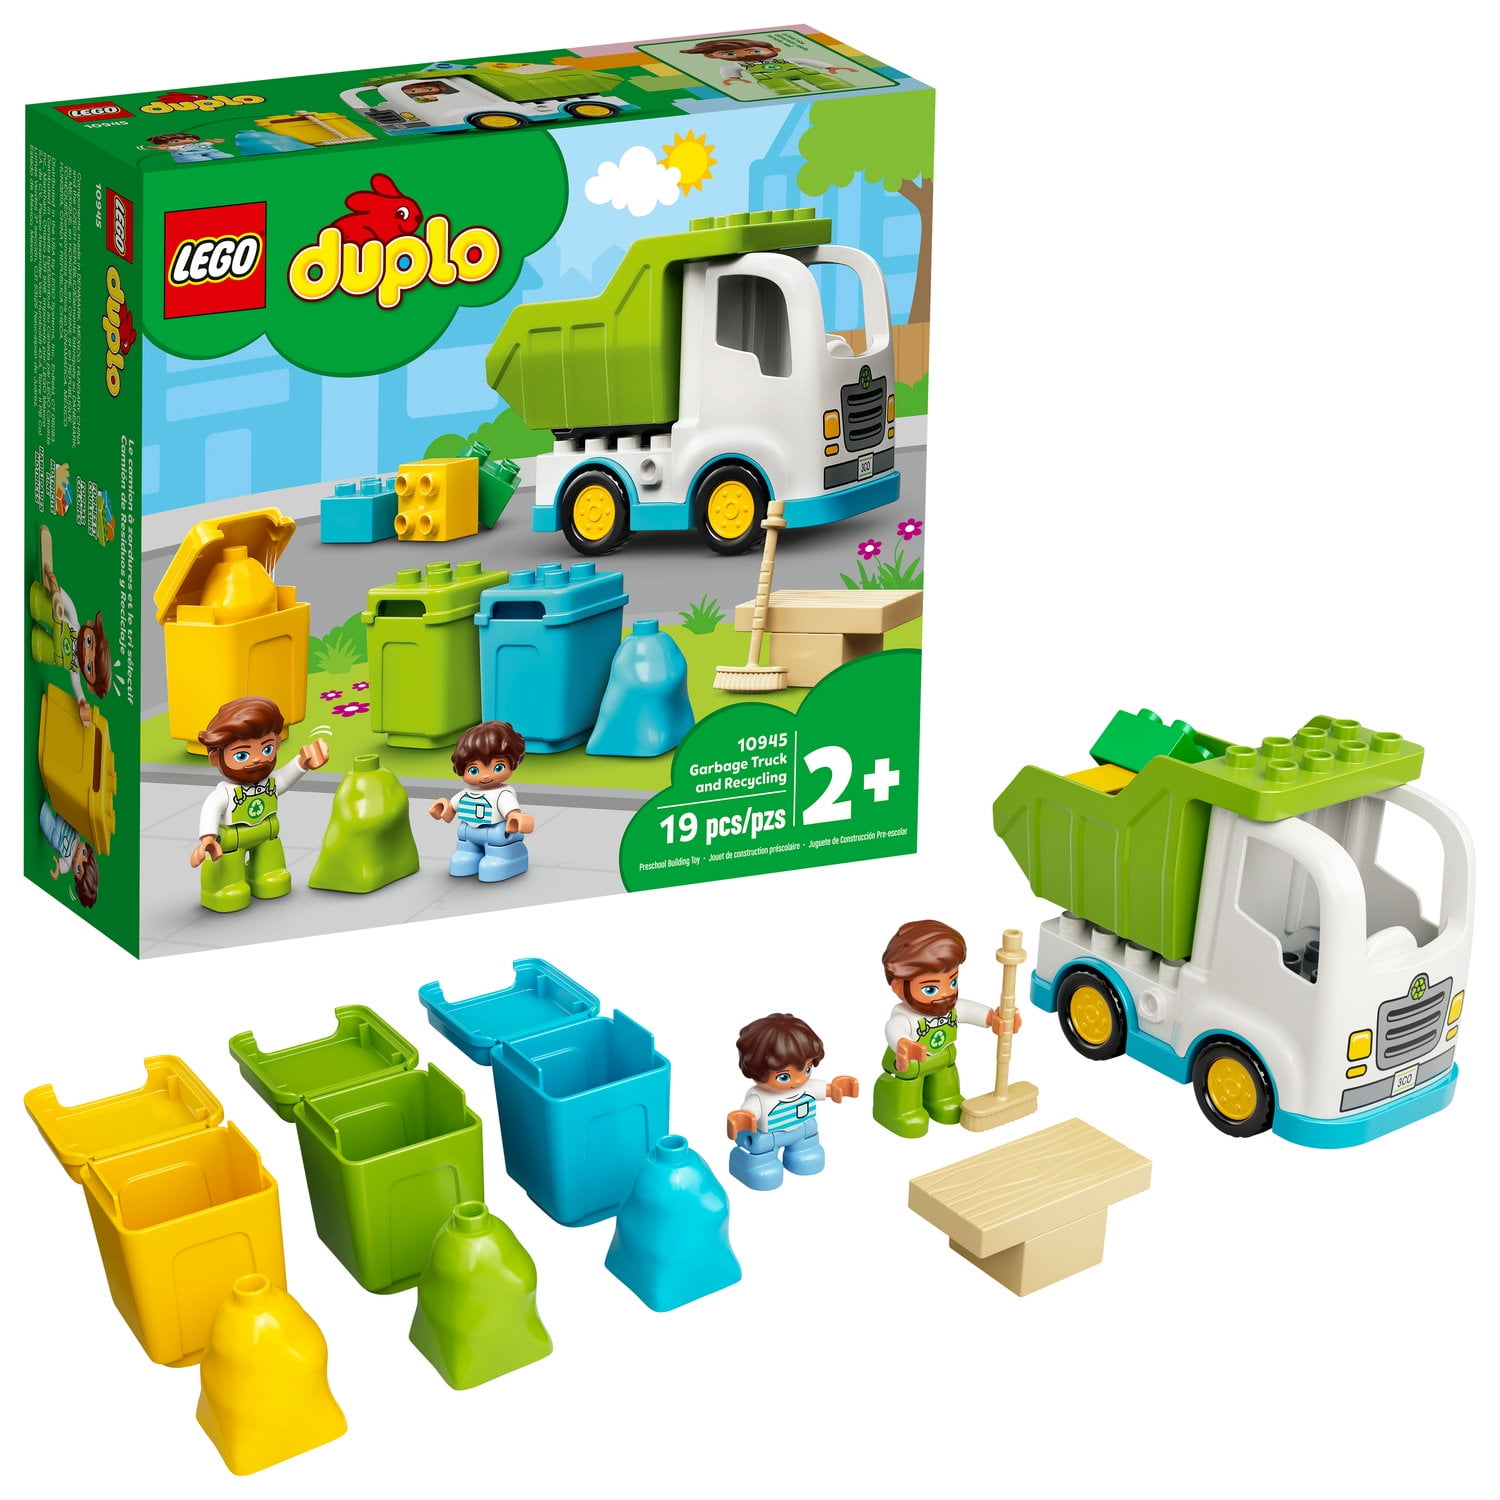 LEGO Duplo Nursery Furniture for sale online 28 